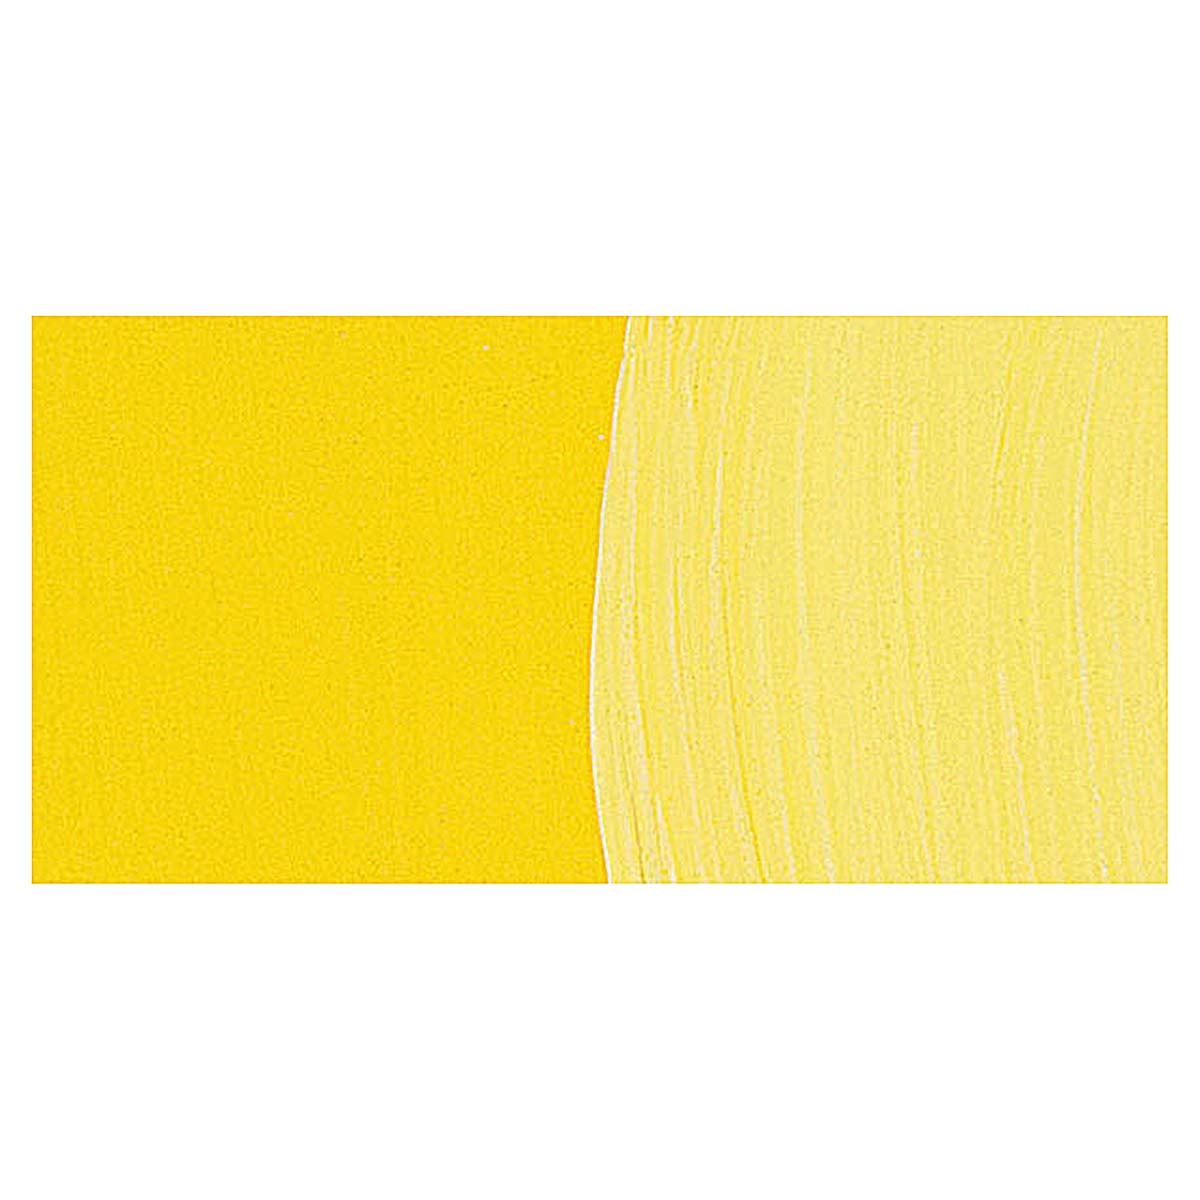 Winsor & Newton Designers Gouache - Cadmium Yellow Pale 14 ml